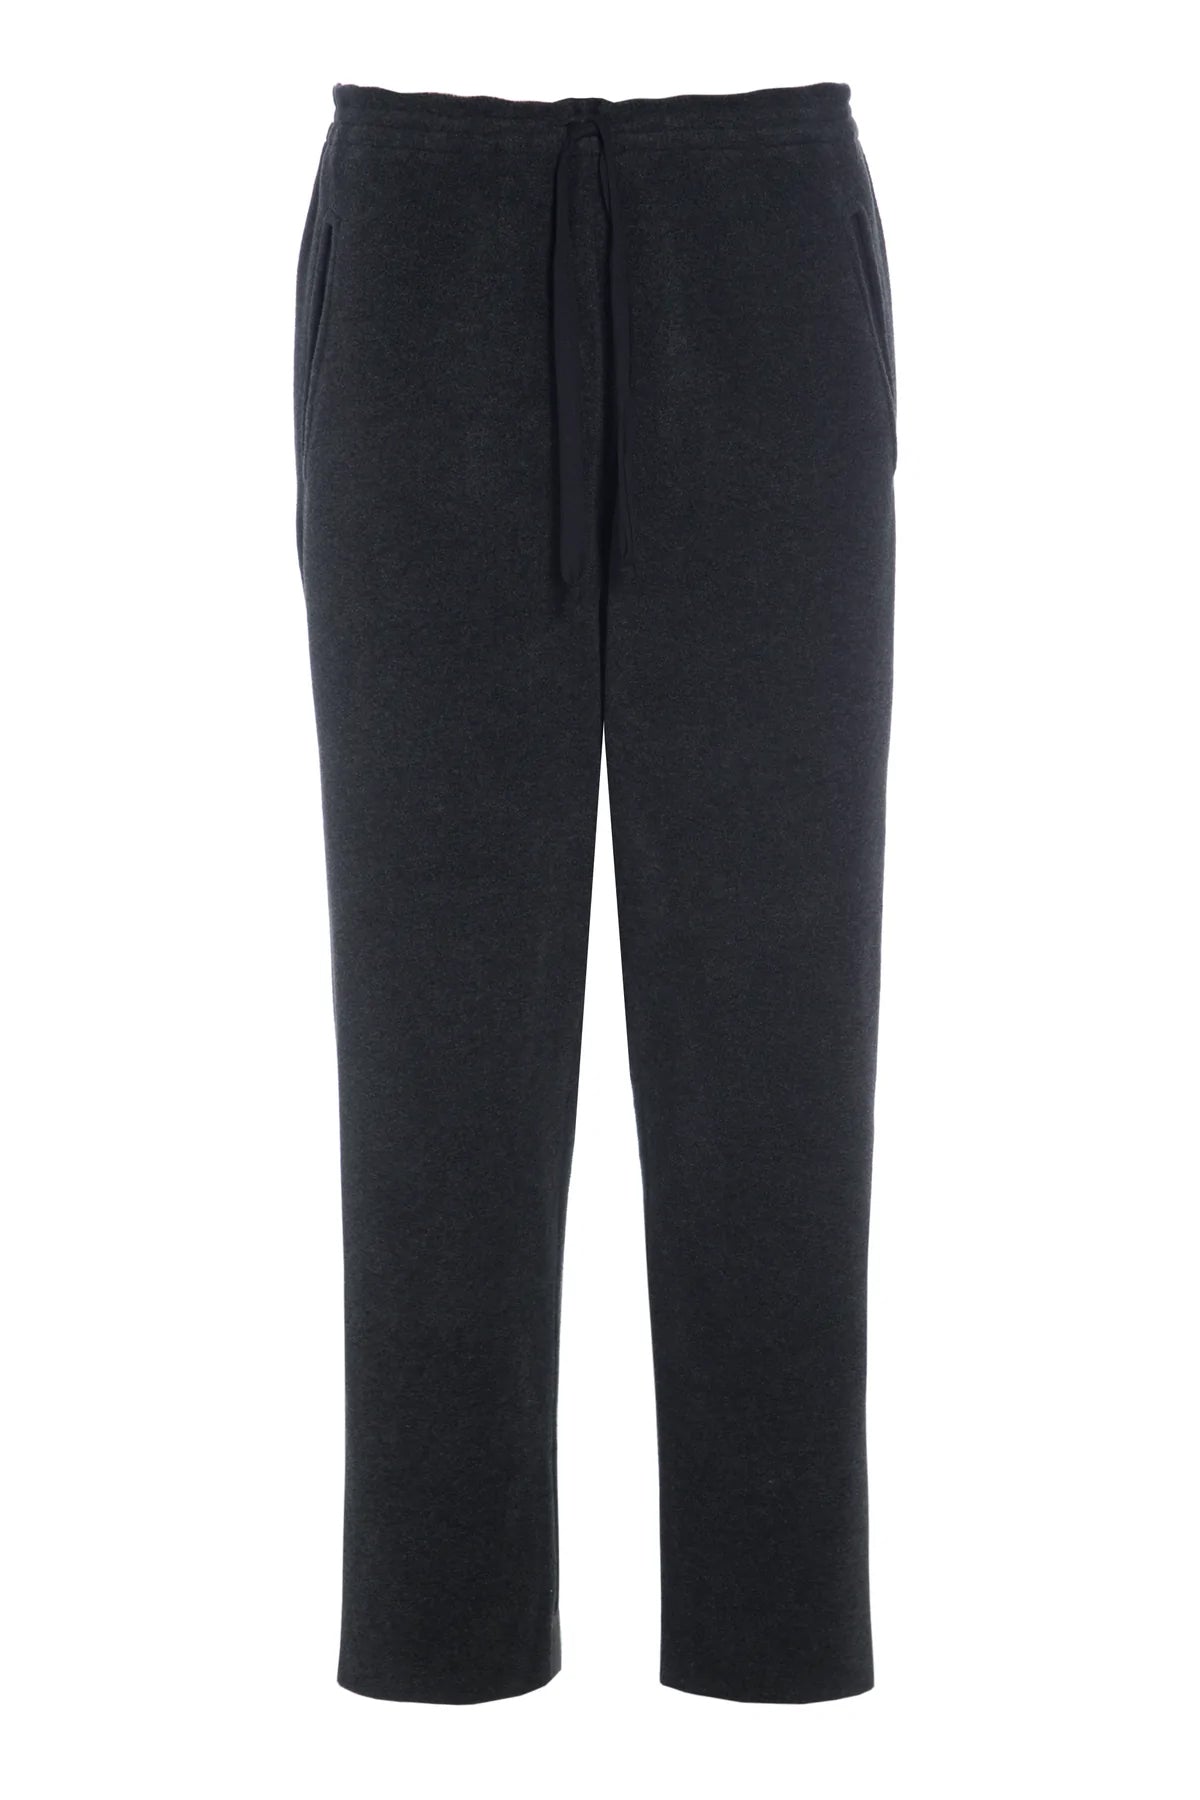 Henriette Steffensen Fleece Pants Soft Black 2106 – KIITOSlife